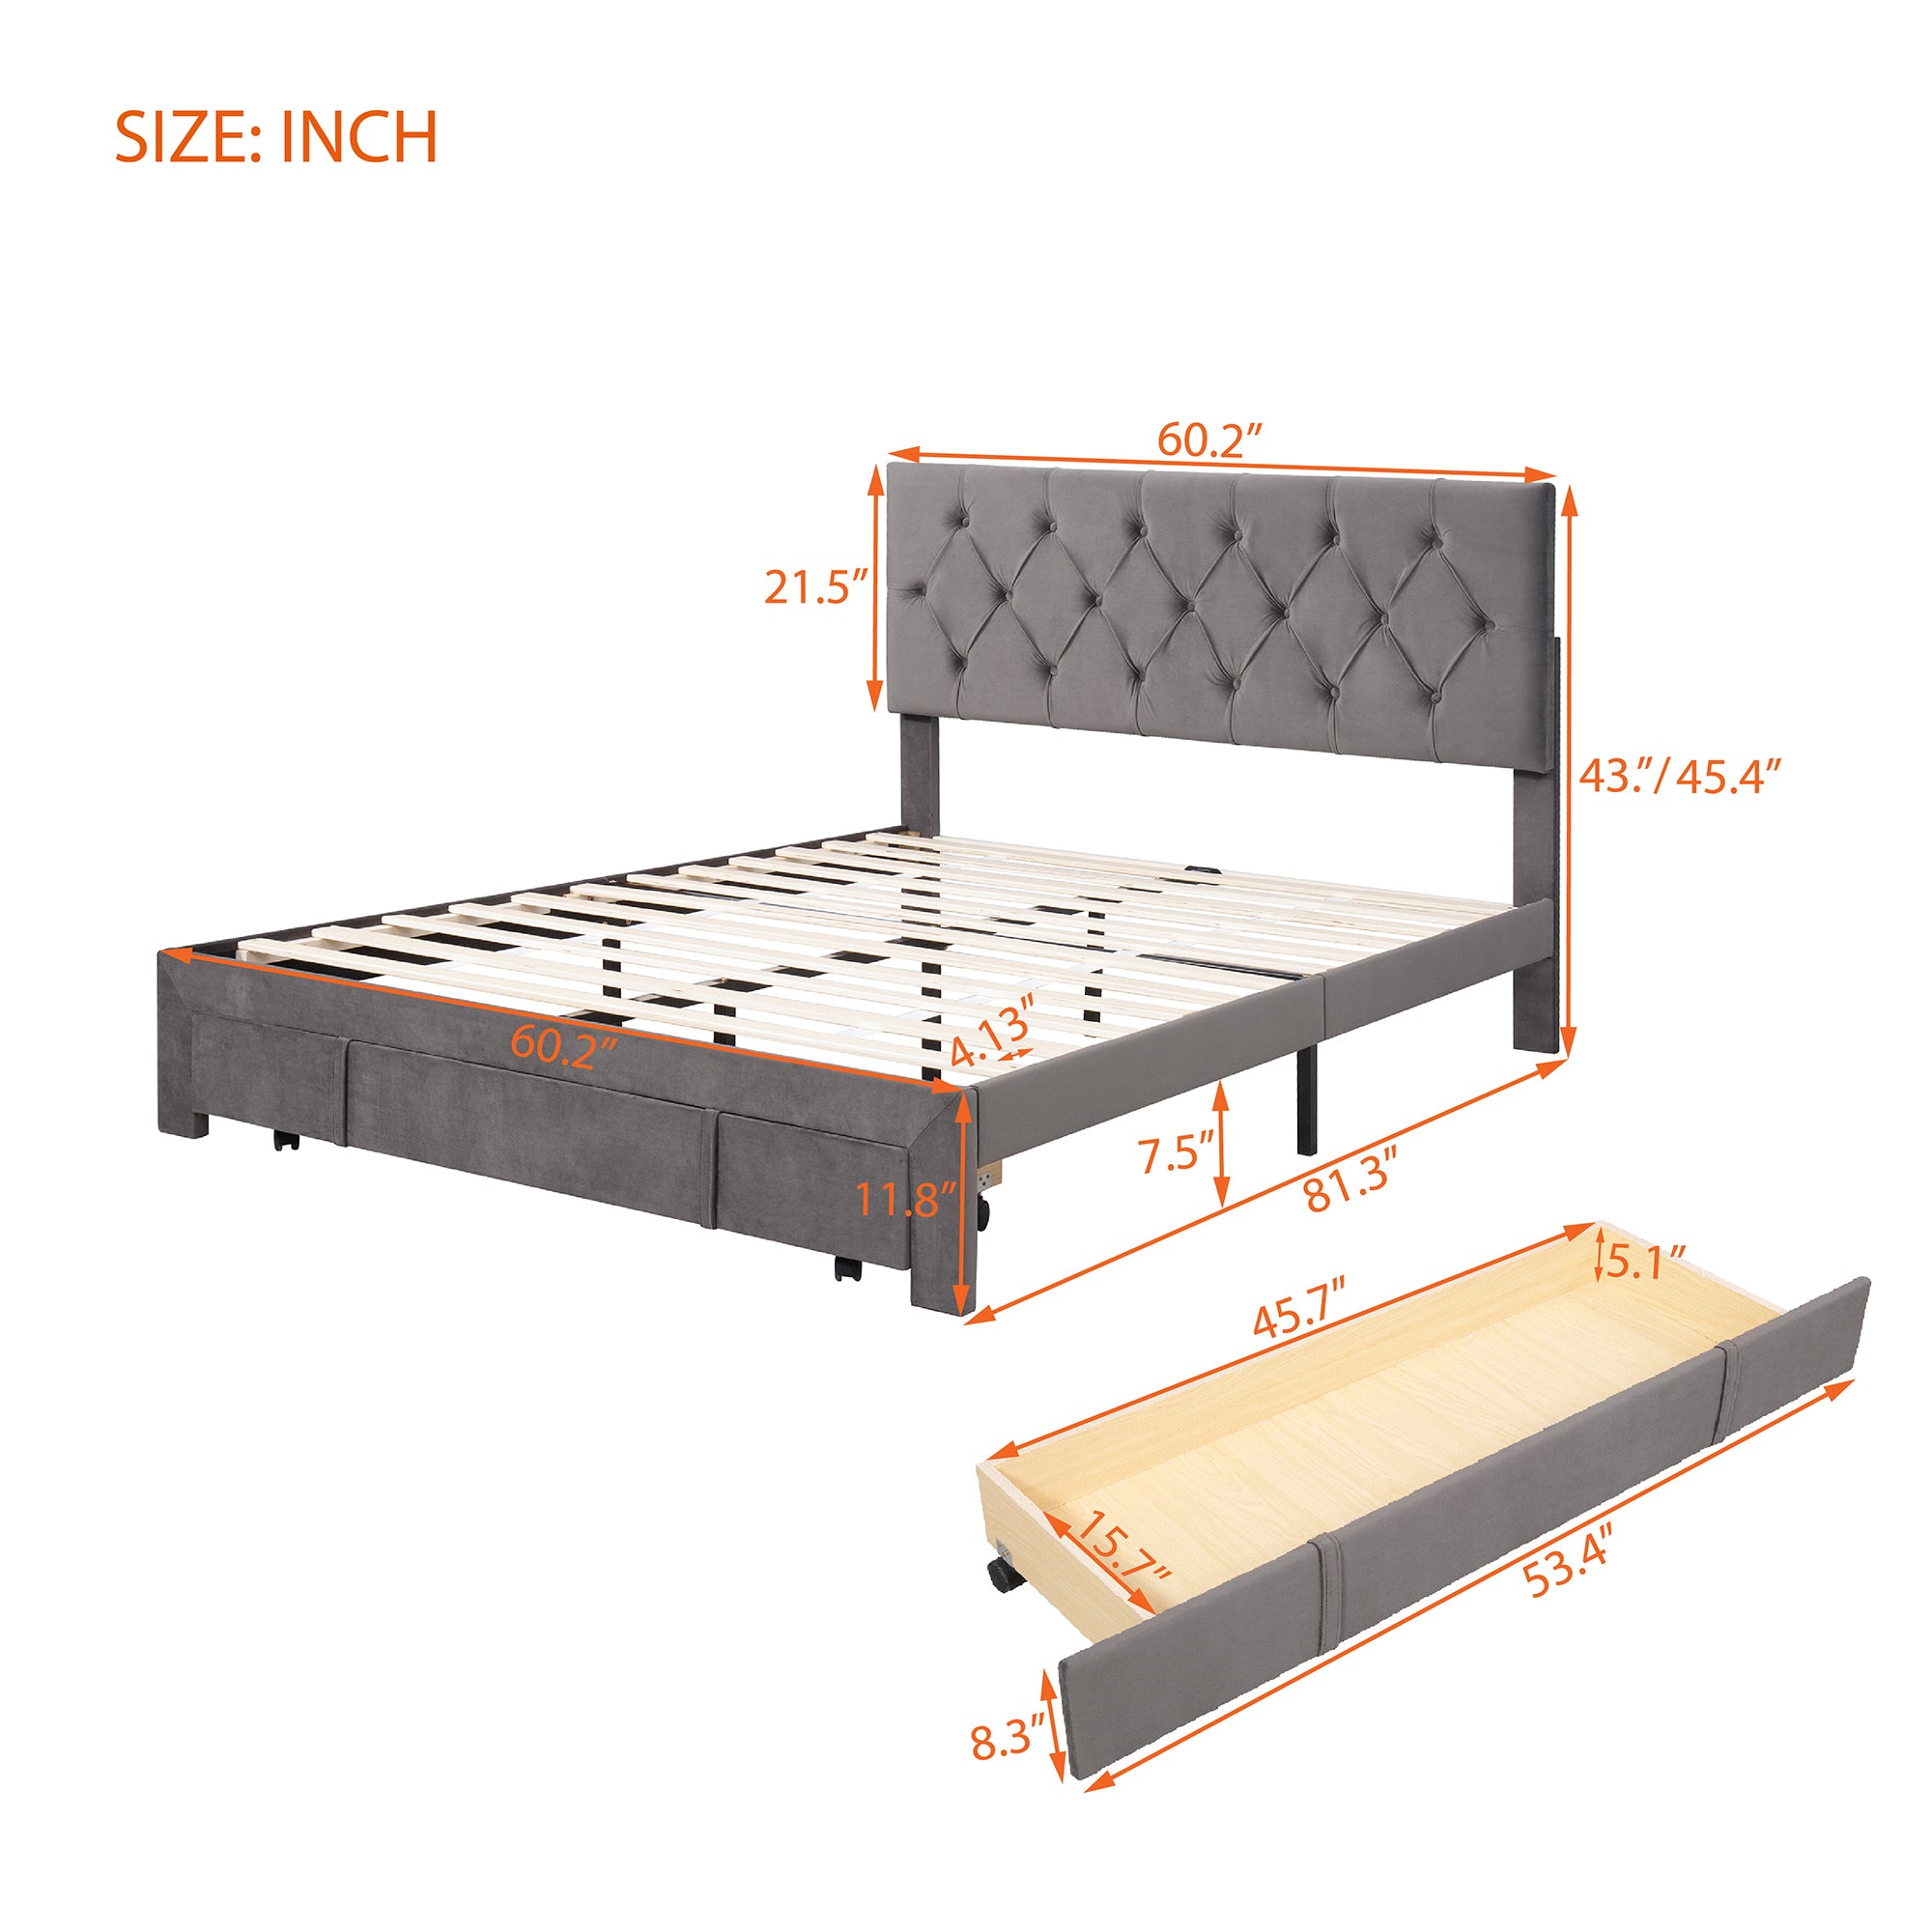 Queen Size Storage Bed Velvet Upholstered Platform Bed grey-velvet